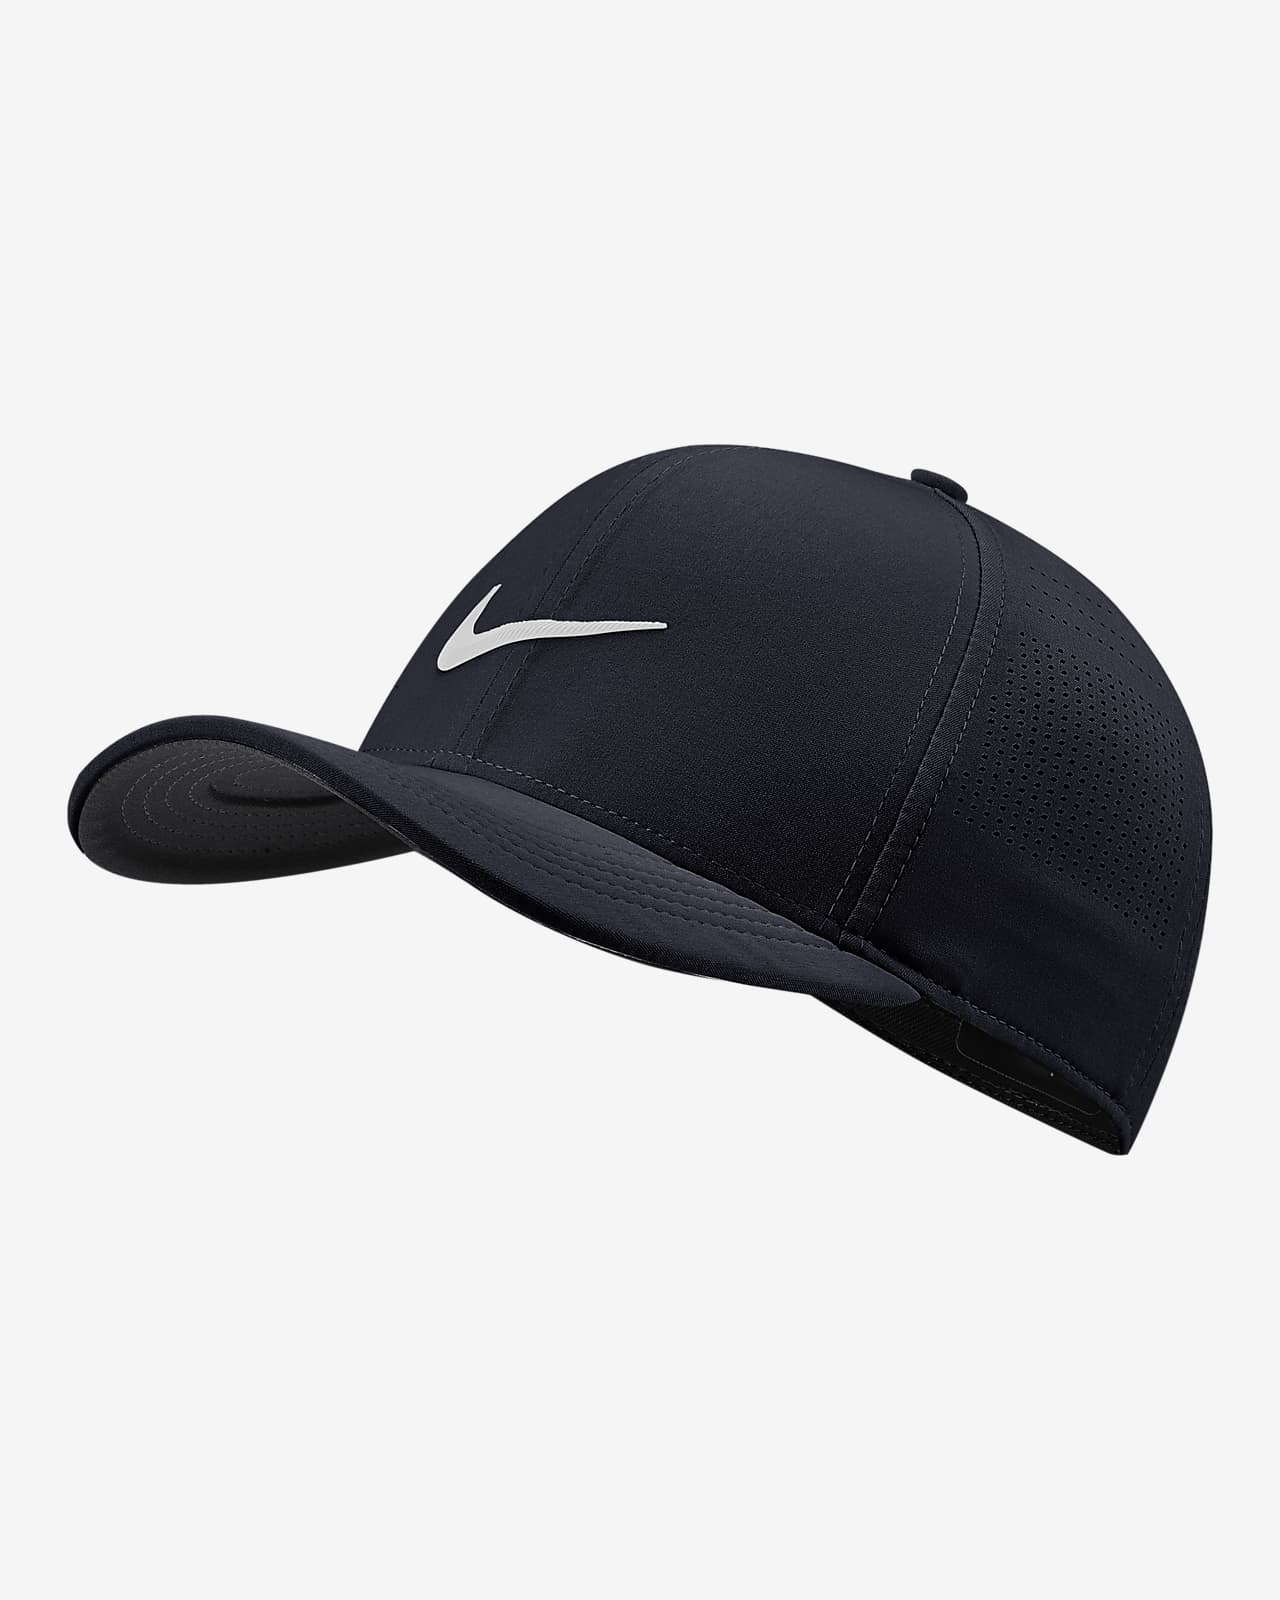 Nike AeroBill Classic99 Golf Hat. Nike.com